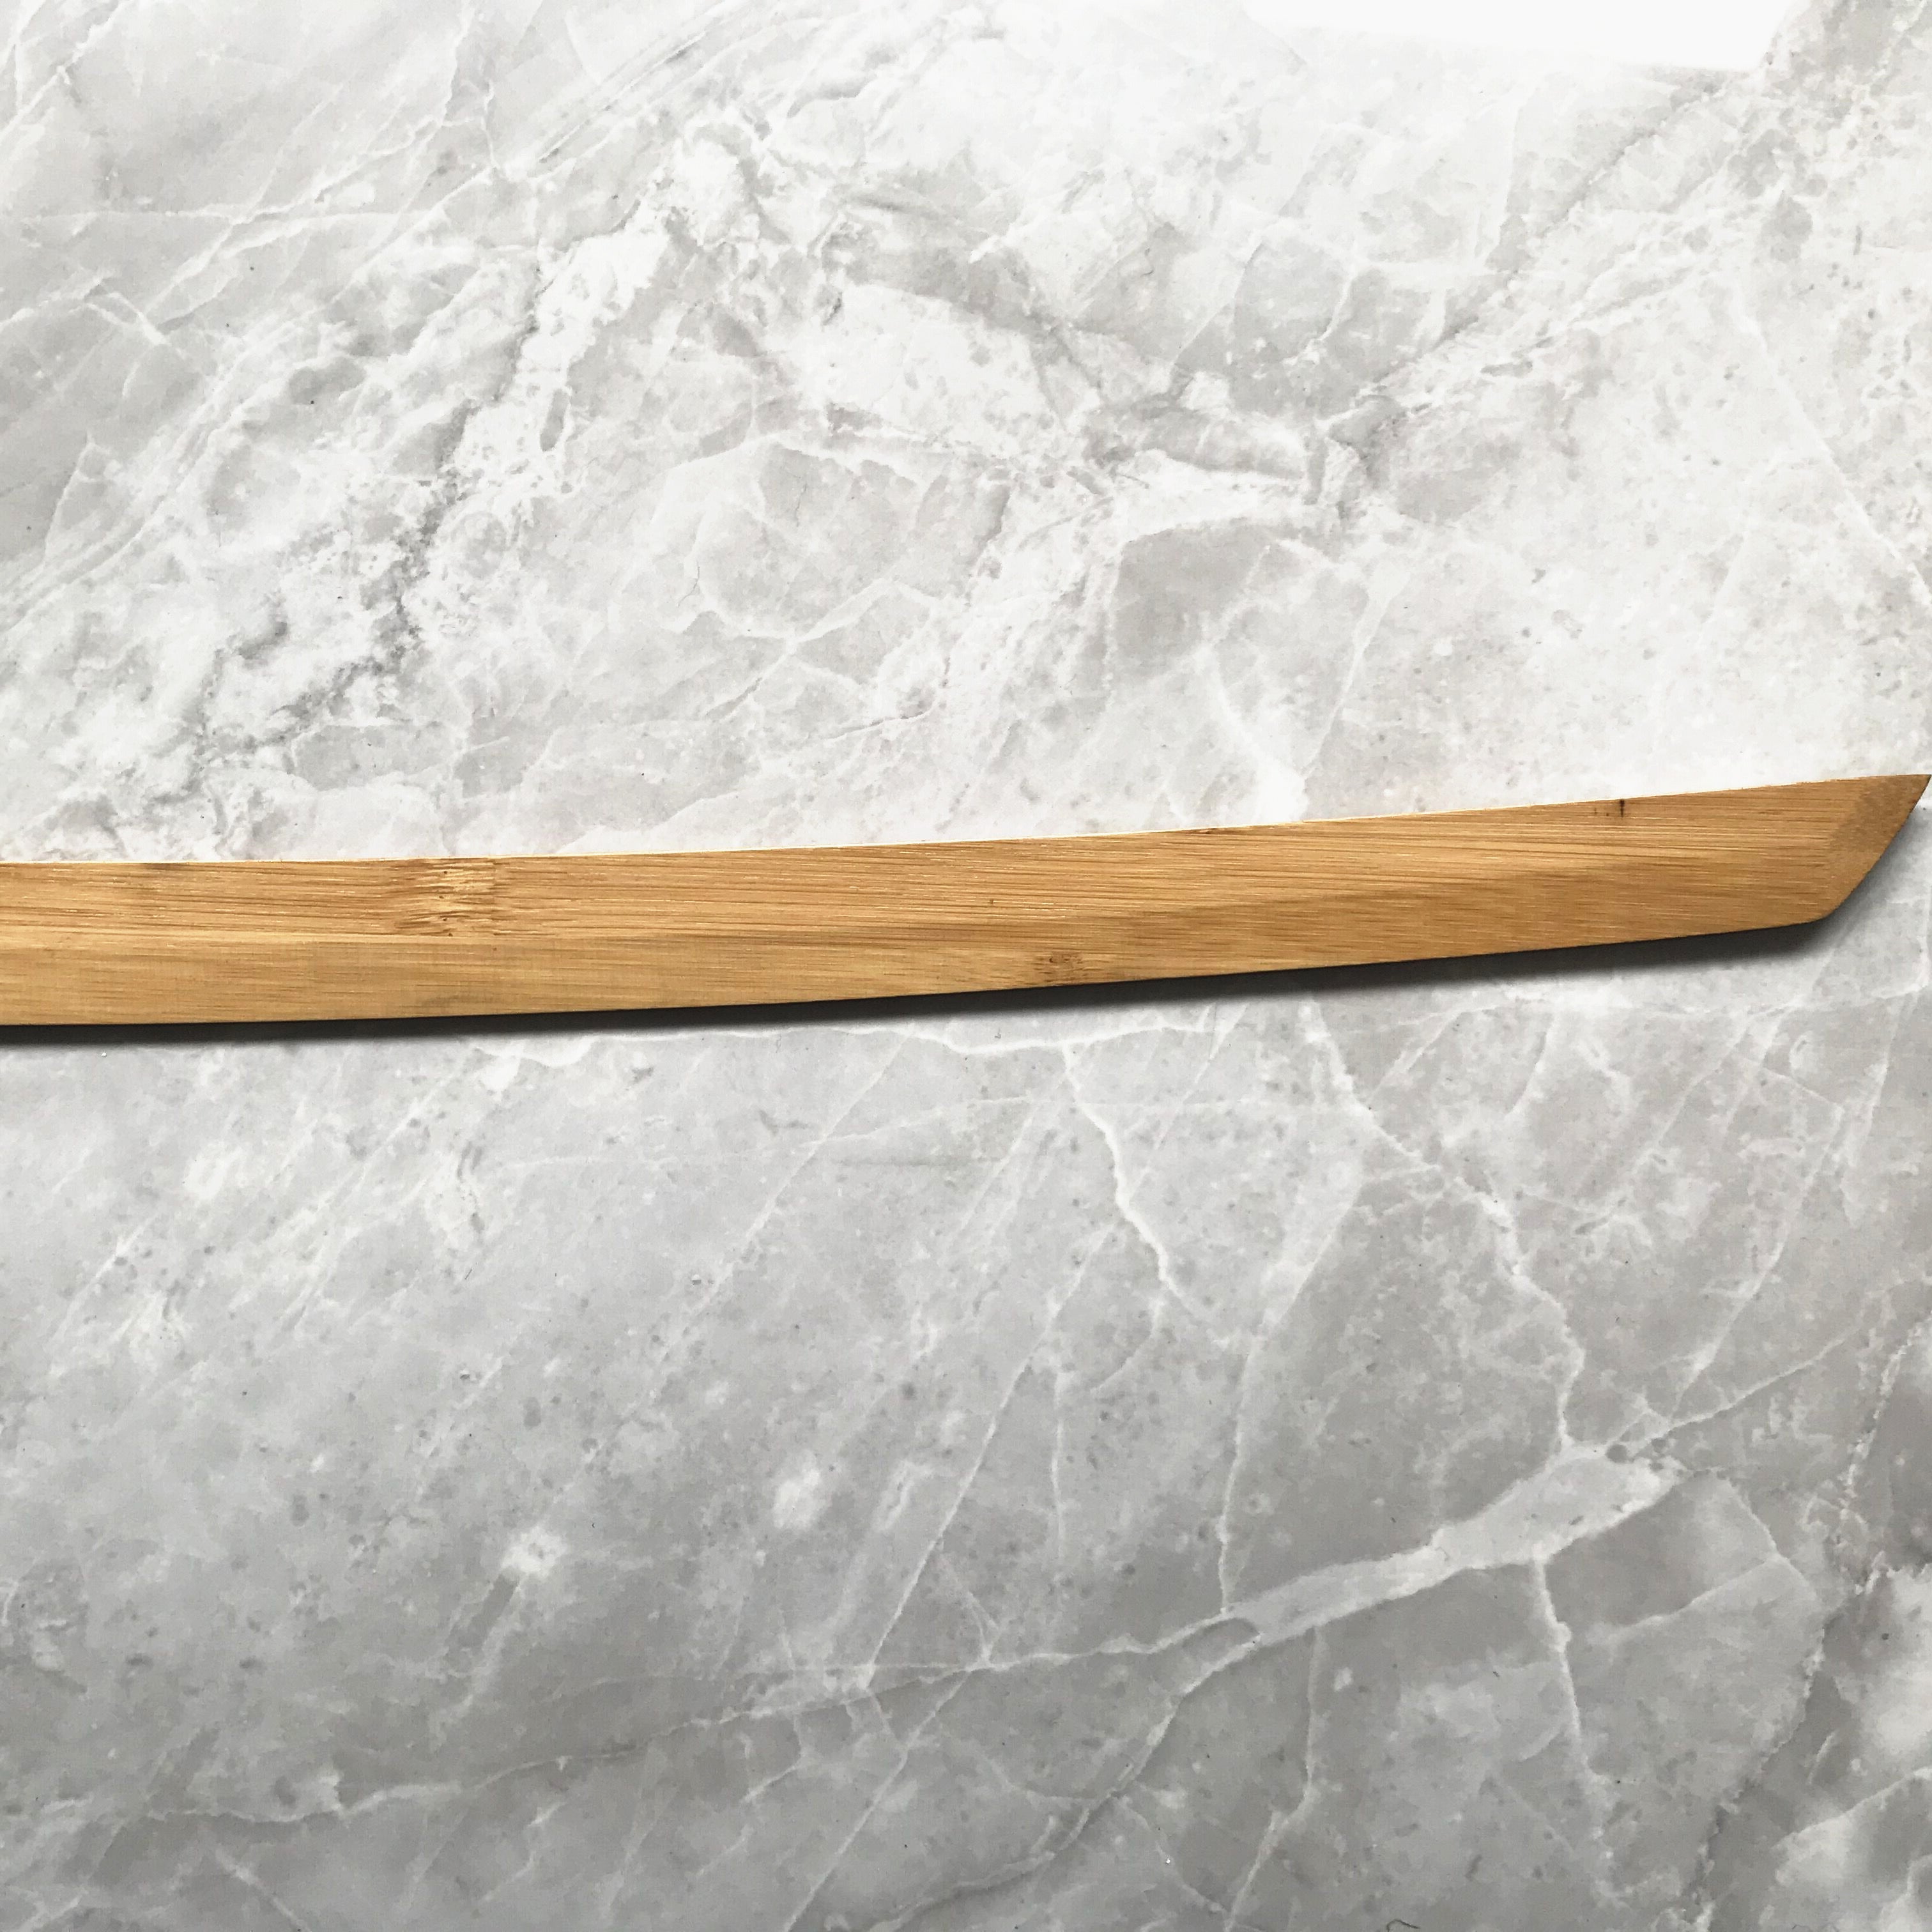 Shadow Snake Katana,Wooden Katana,Japanese Samurai Sword,Handmade Wooden Sword,Bamboo Blade